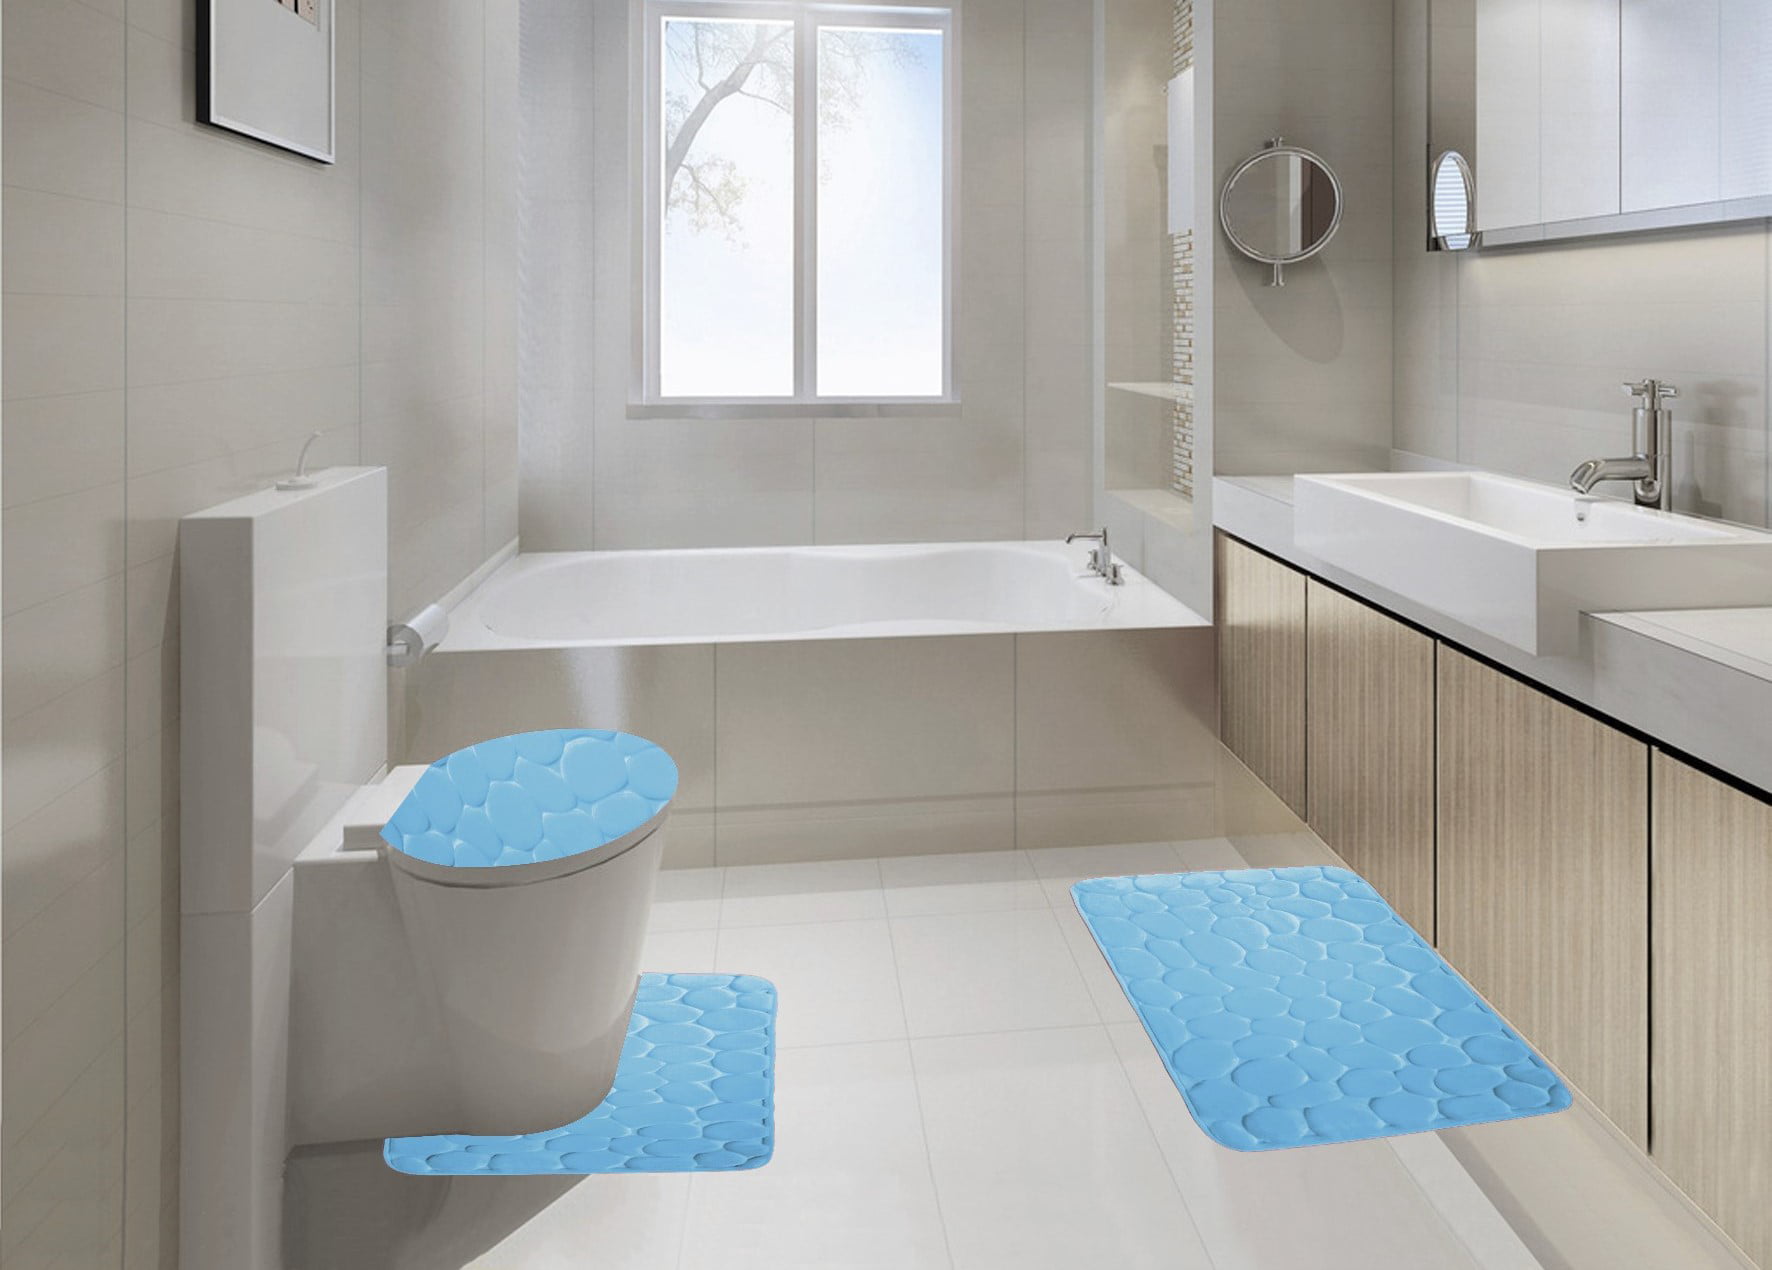 Details about   3 pc Solid Light Blue Bathroom Rug Set Bath Mats Bath Set Super Soft Anti Slip 